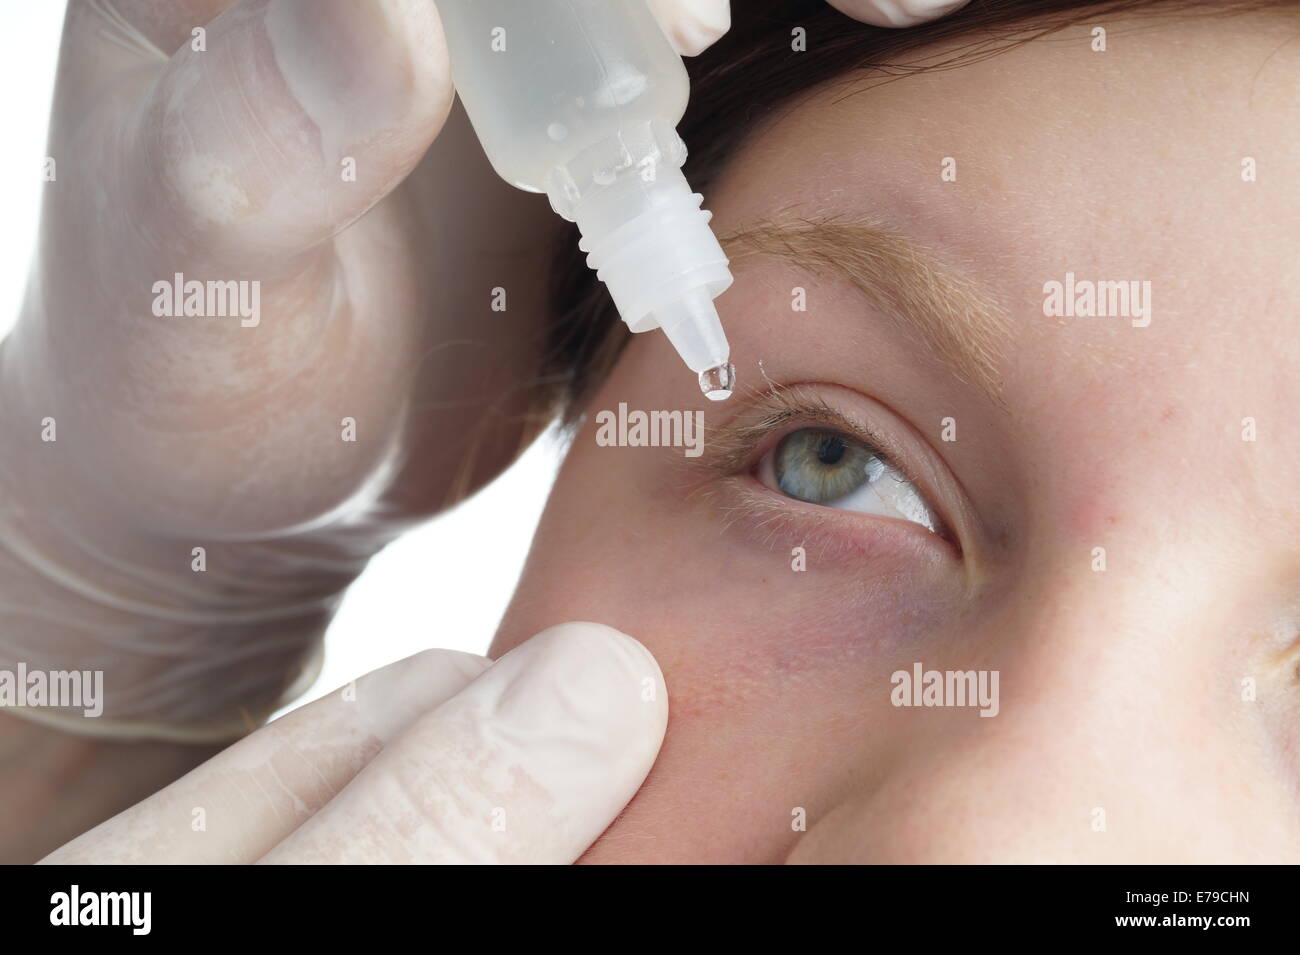 Nurse giving a child eye drops. Medical procedure Stock Photo